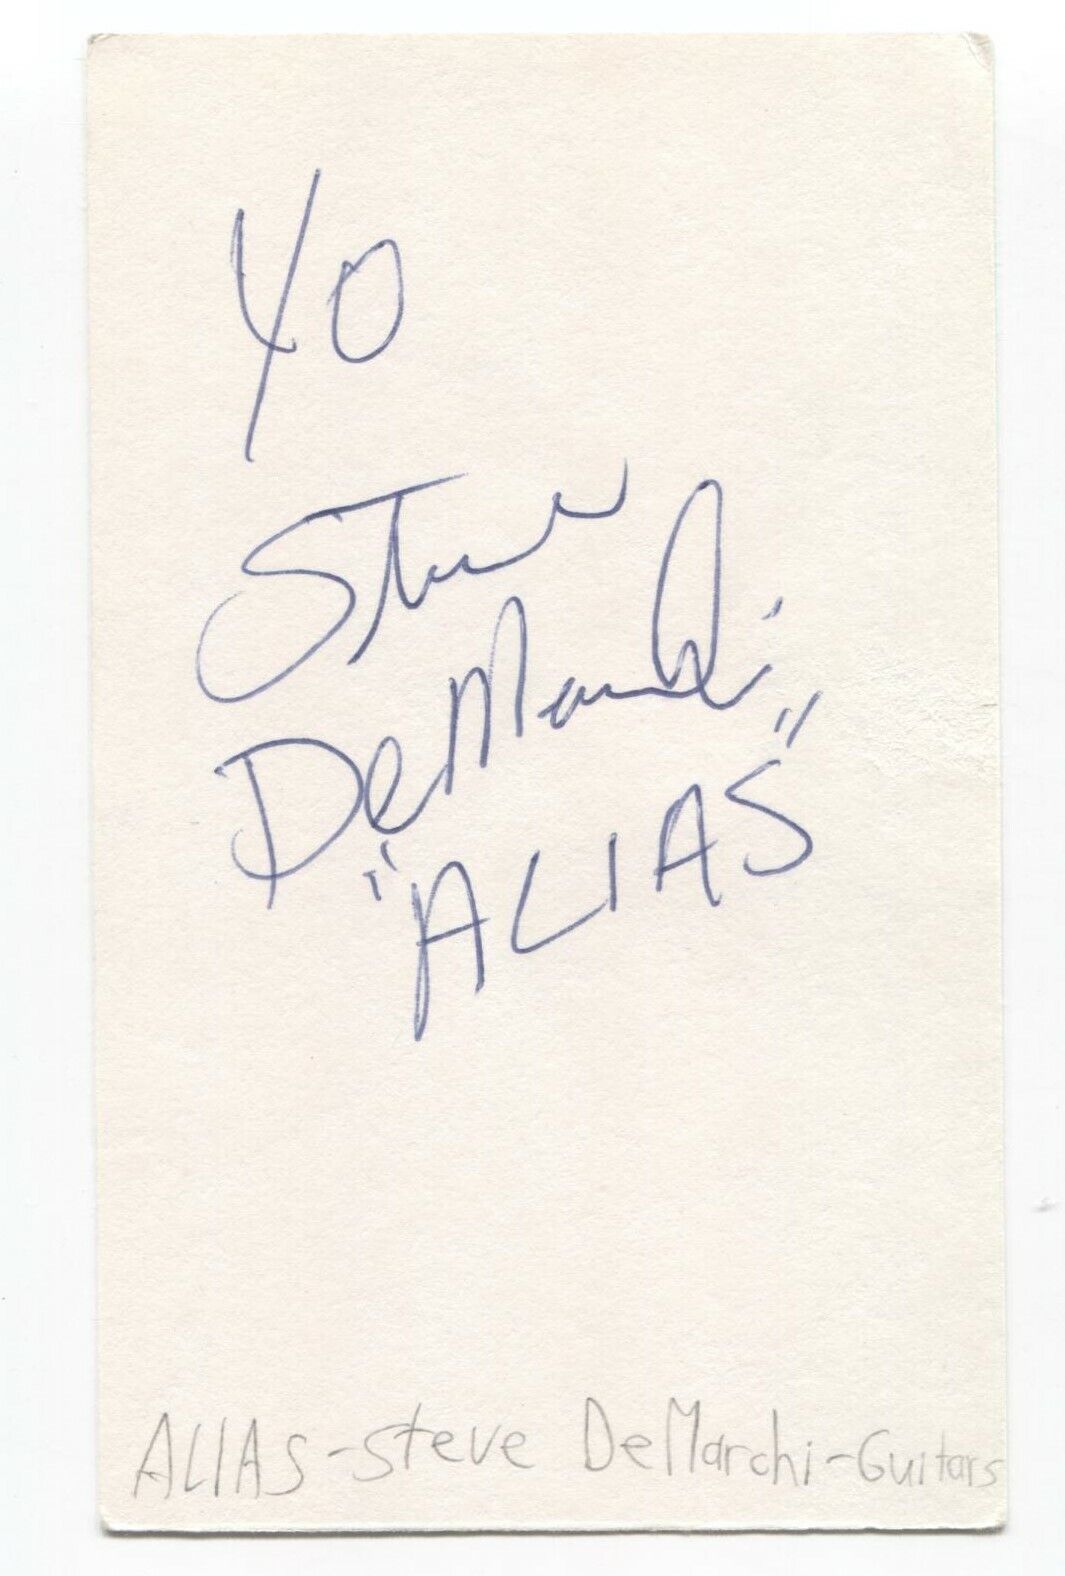 Steve Demarchi Signed 3x5 Index Card Autographed Alias - Cranberries - Sheriff